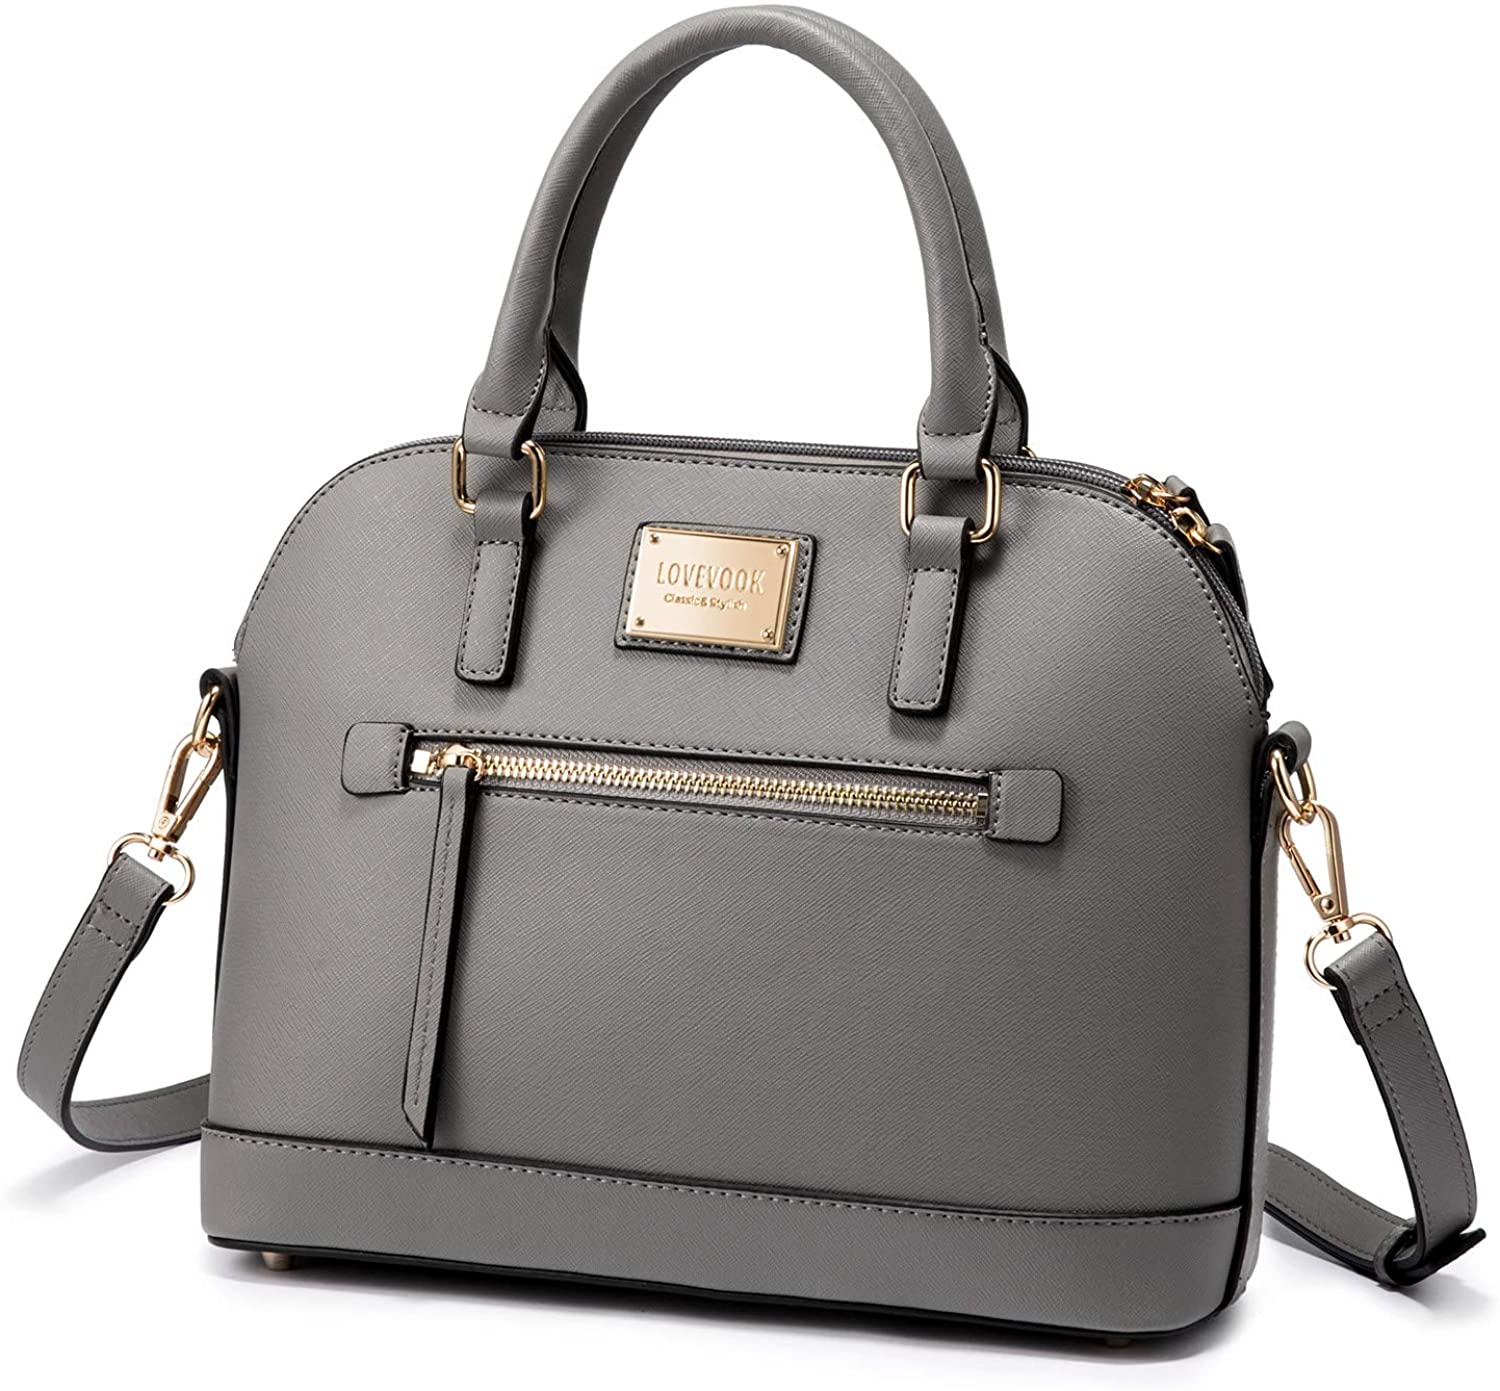 YOUNTASY Top Handle Satchel Handbags for Women Dome Crossbody Purses Shoulder Bag with 3 Zipper Double Compartment 